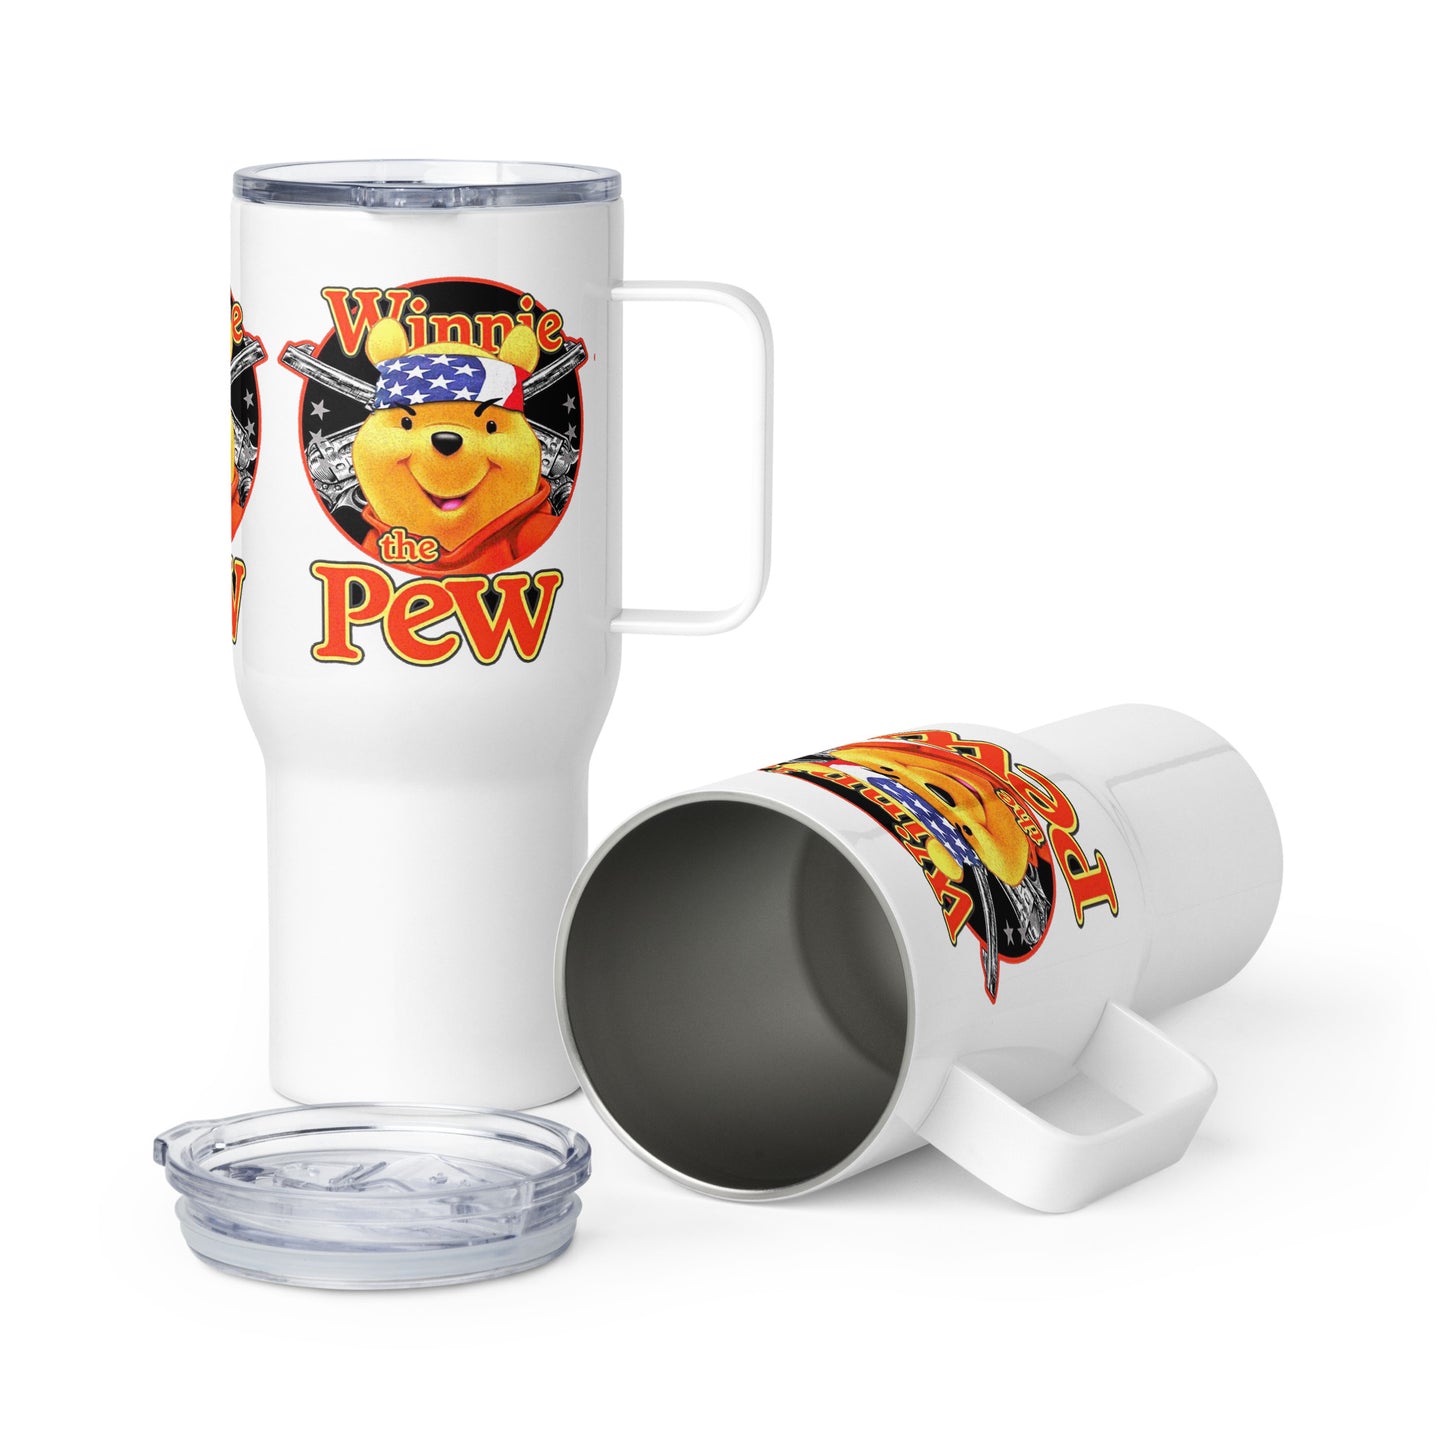 Winnie The Pew Travel mug with a handle